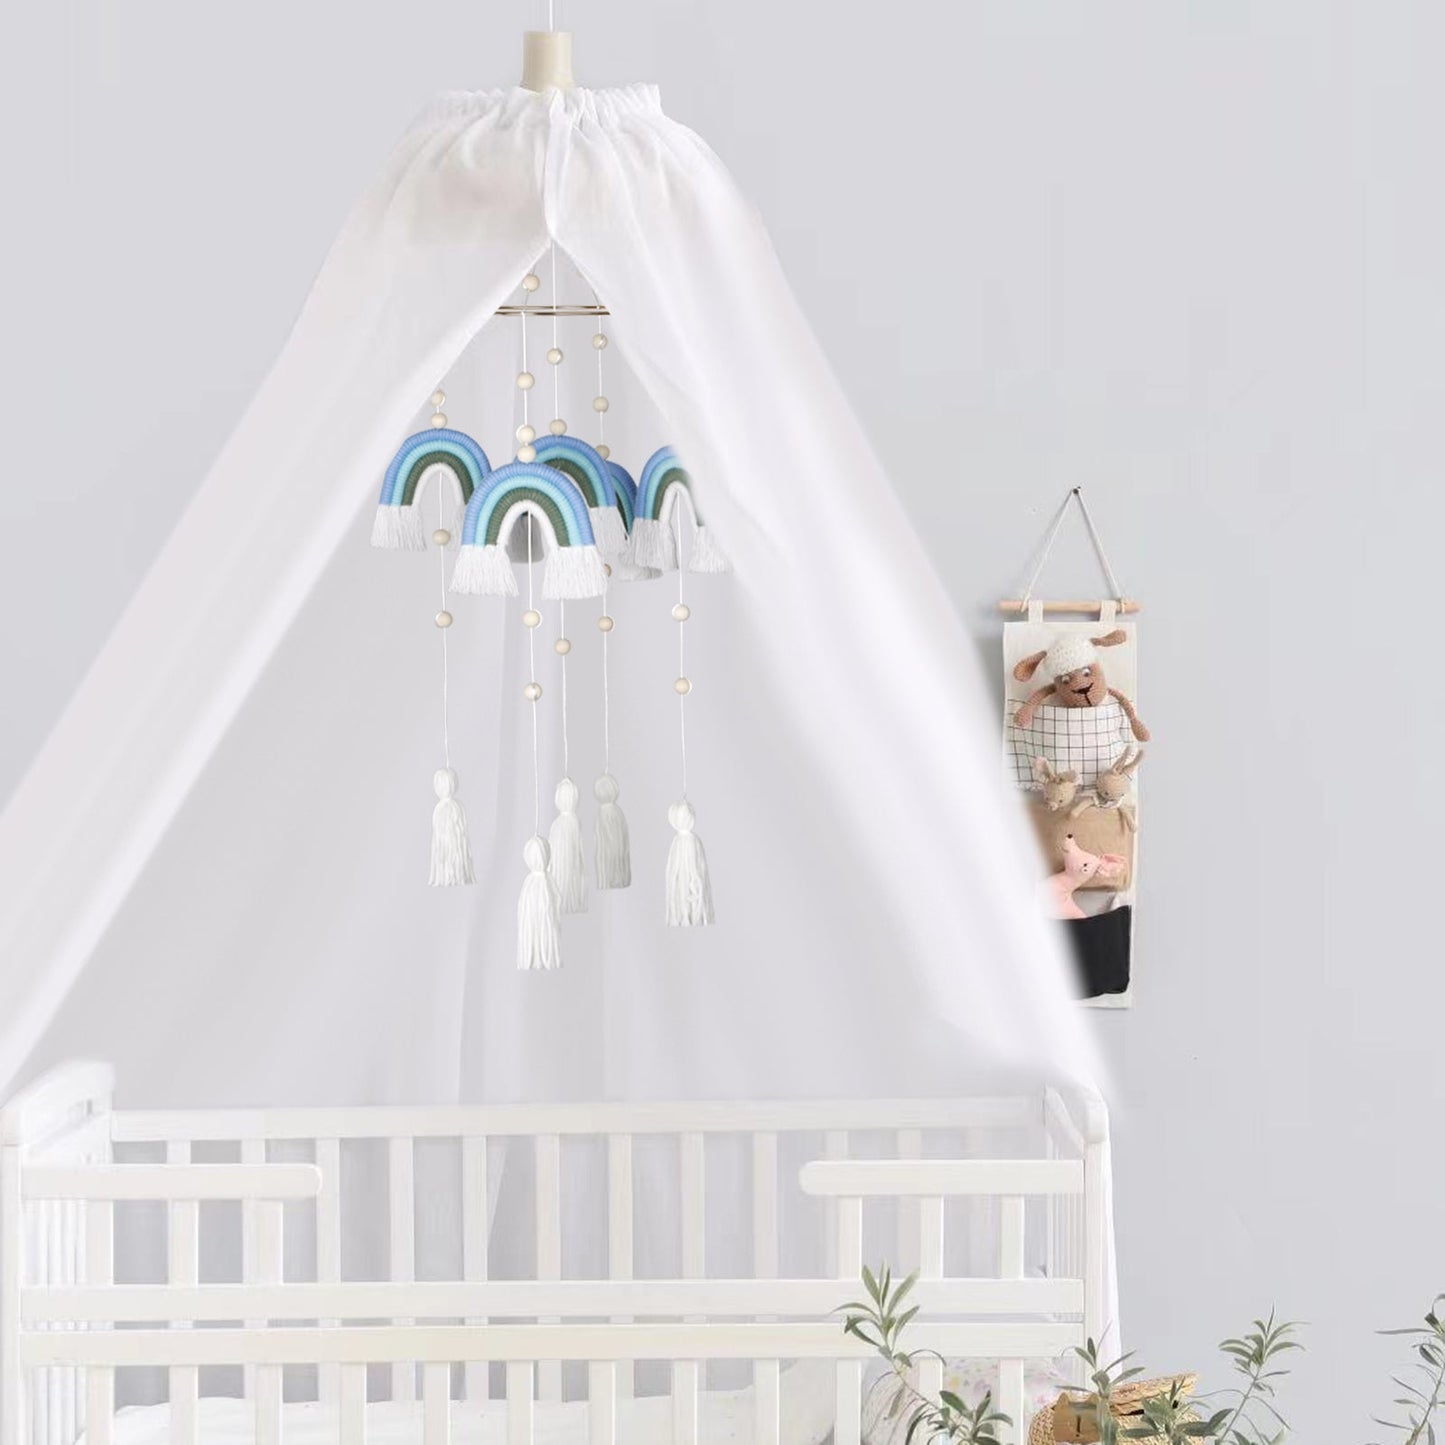 Handmade Rainbow Hanging Baby Crib Mobile For Nursery Room